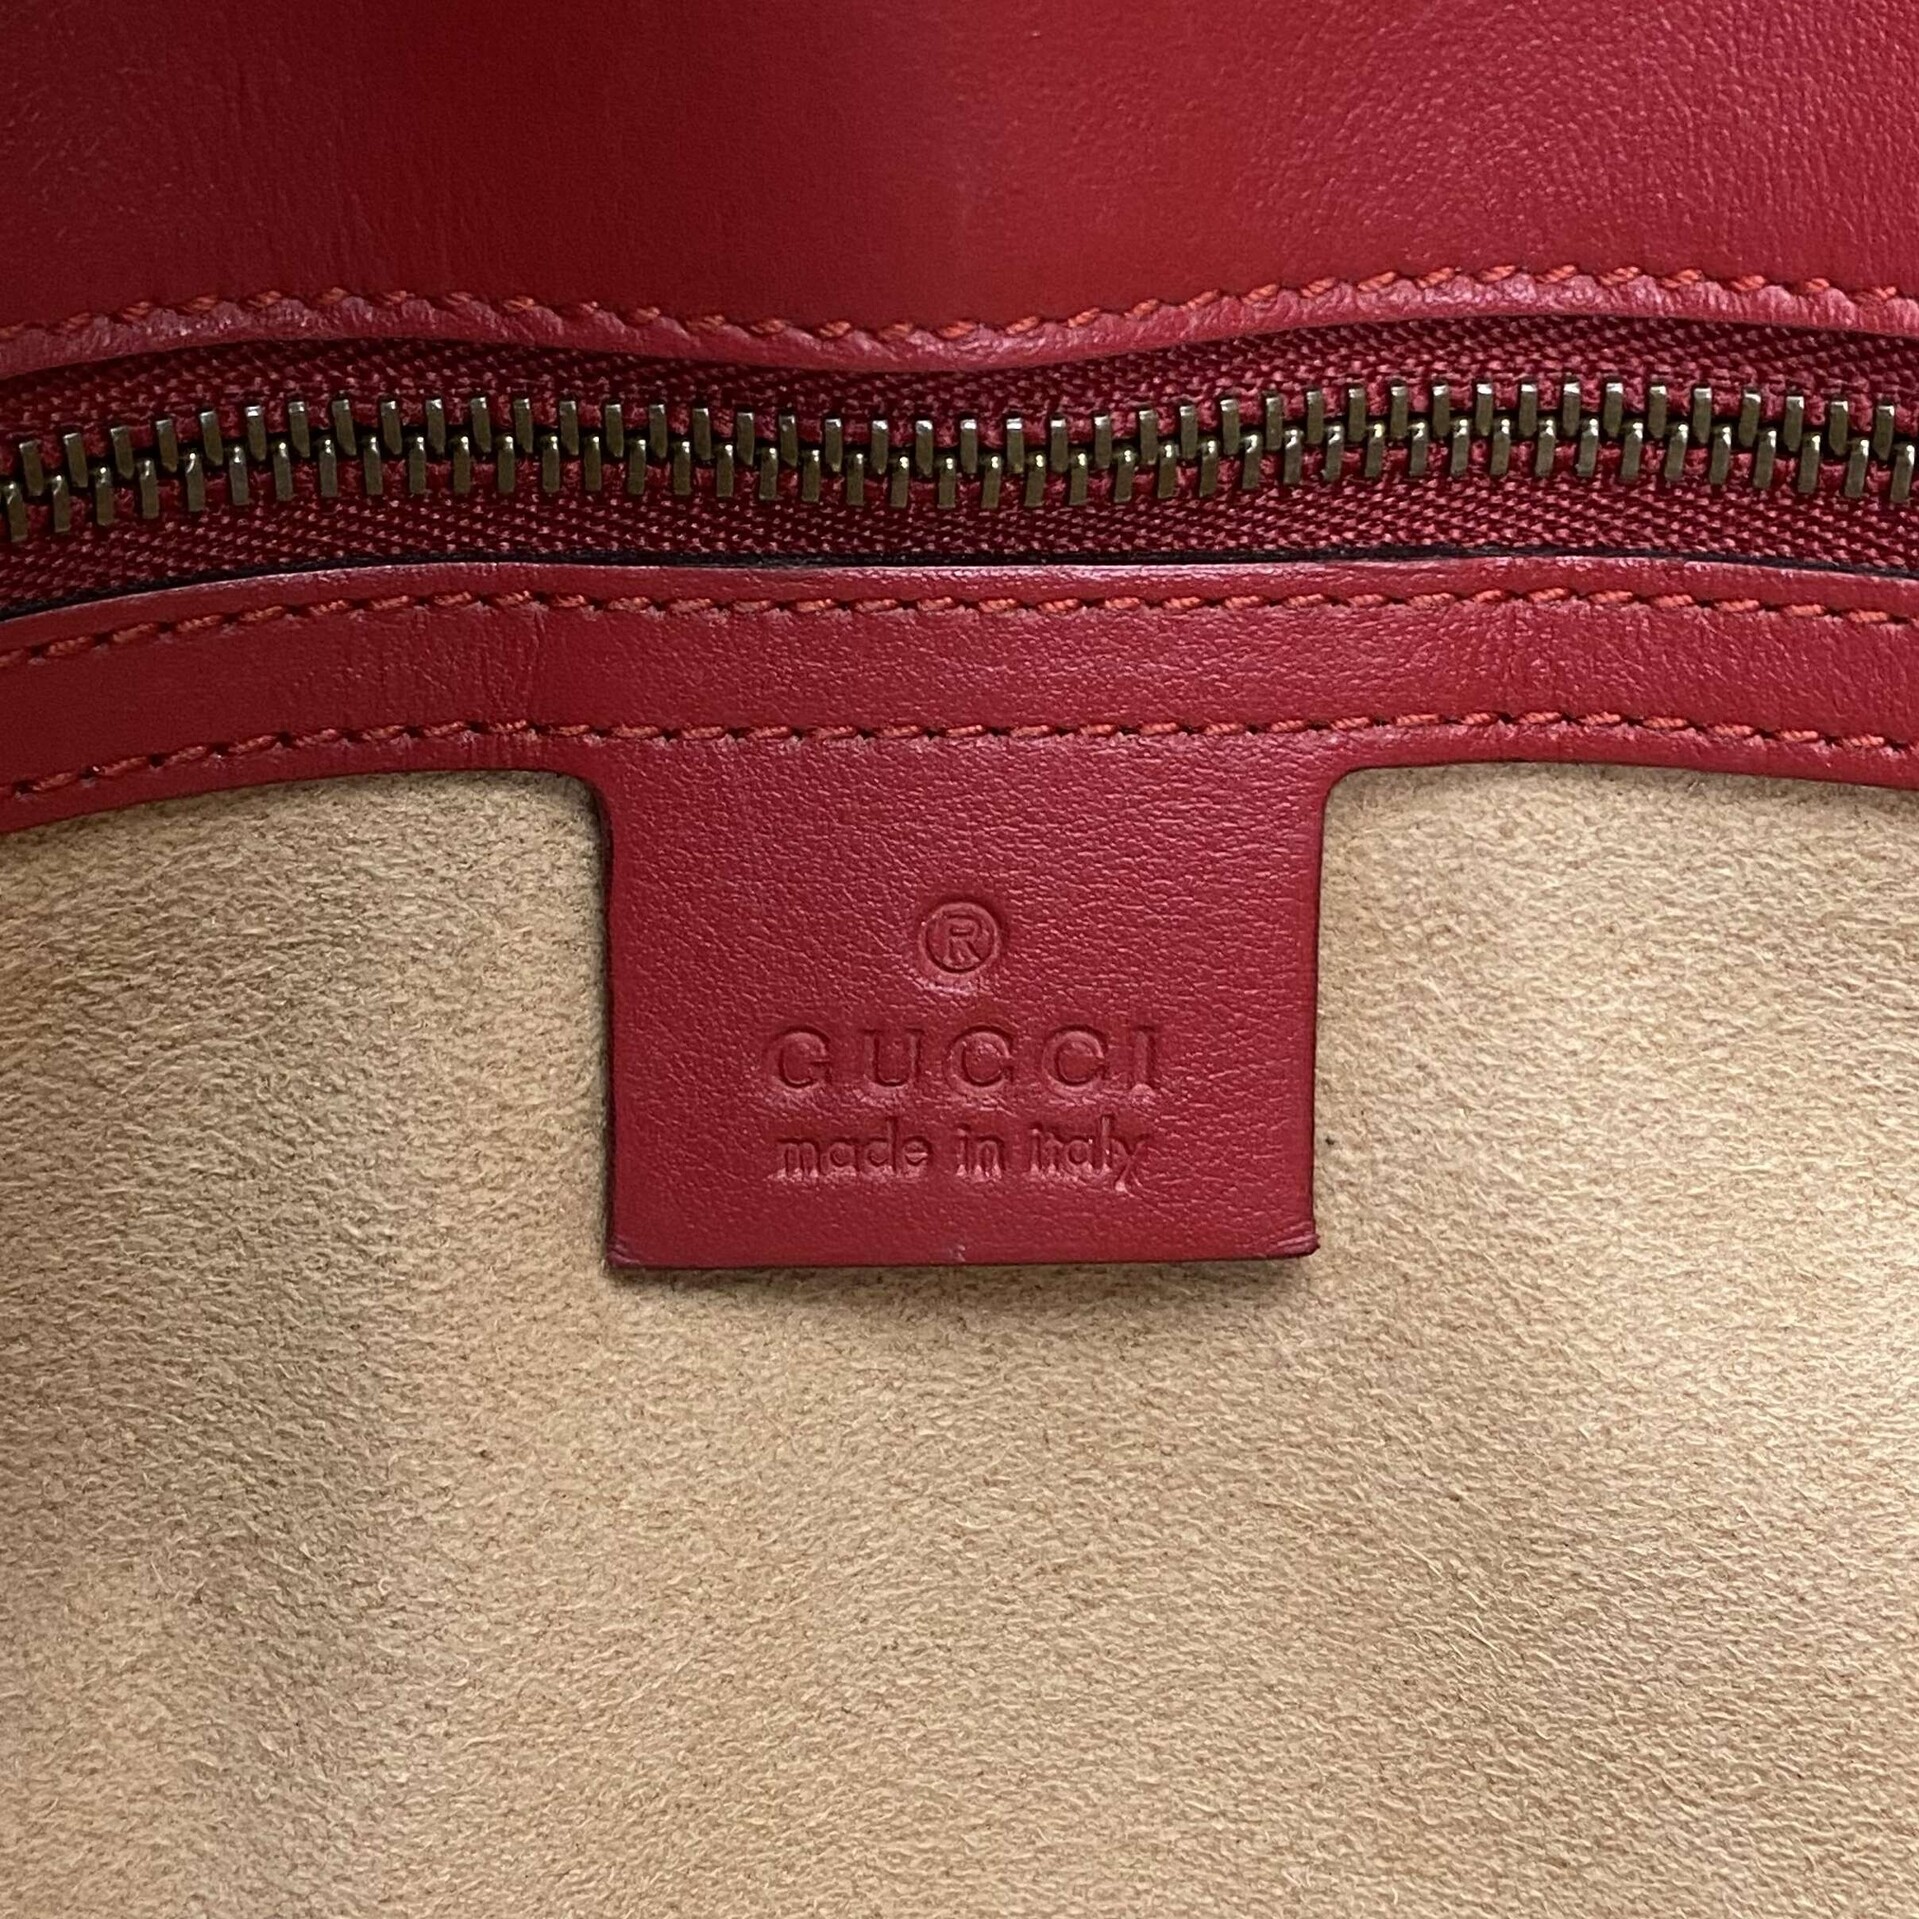 Bolsa Gucci GG Marmont Vermelha